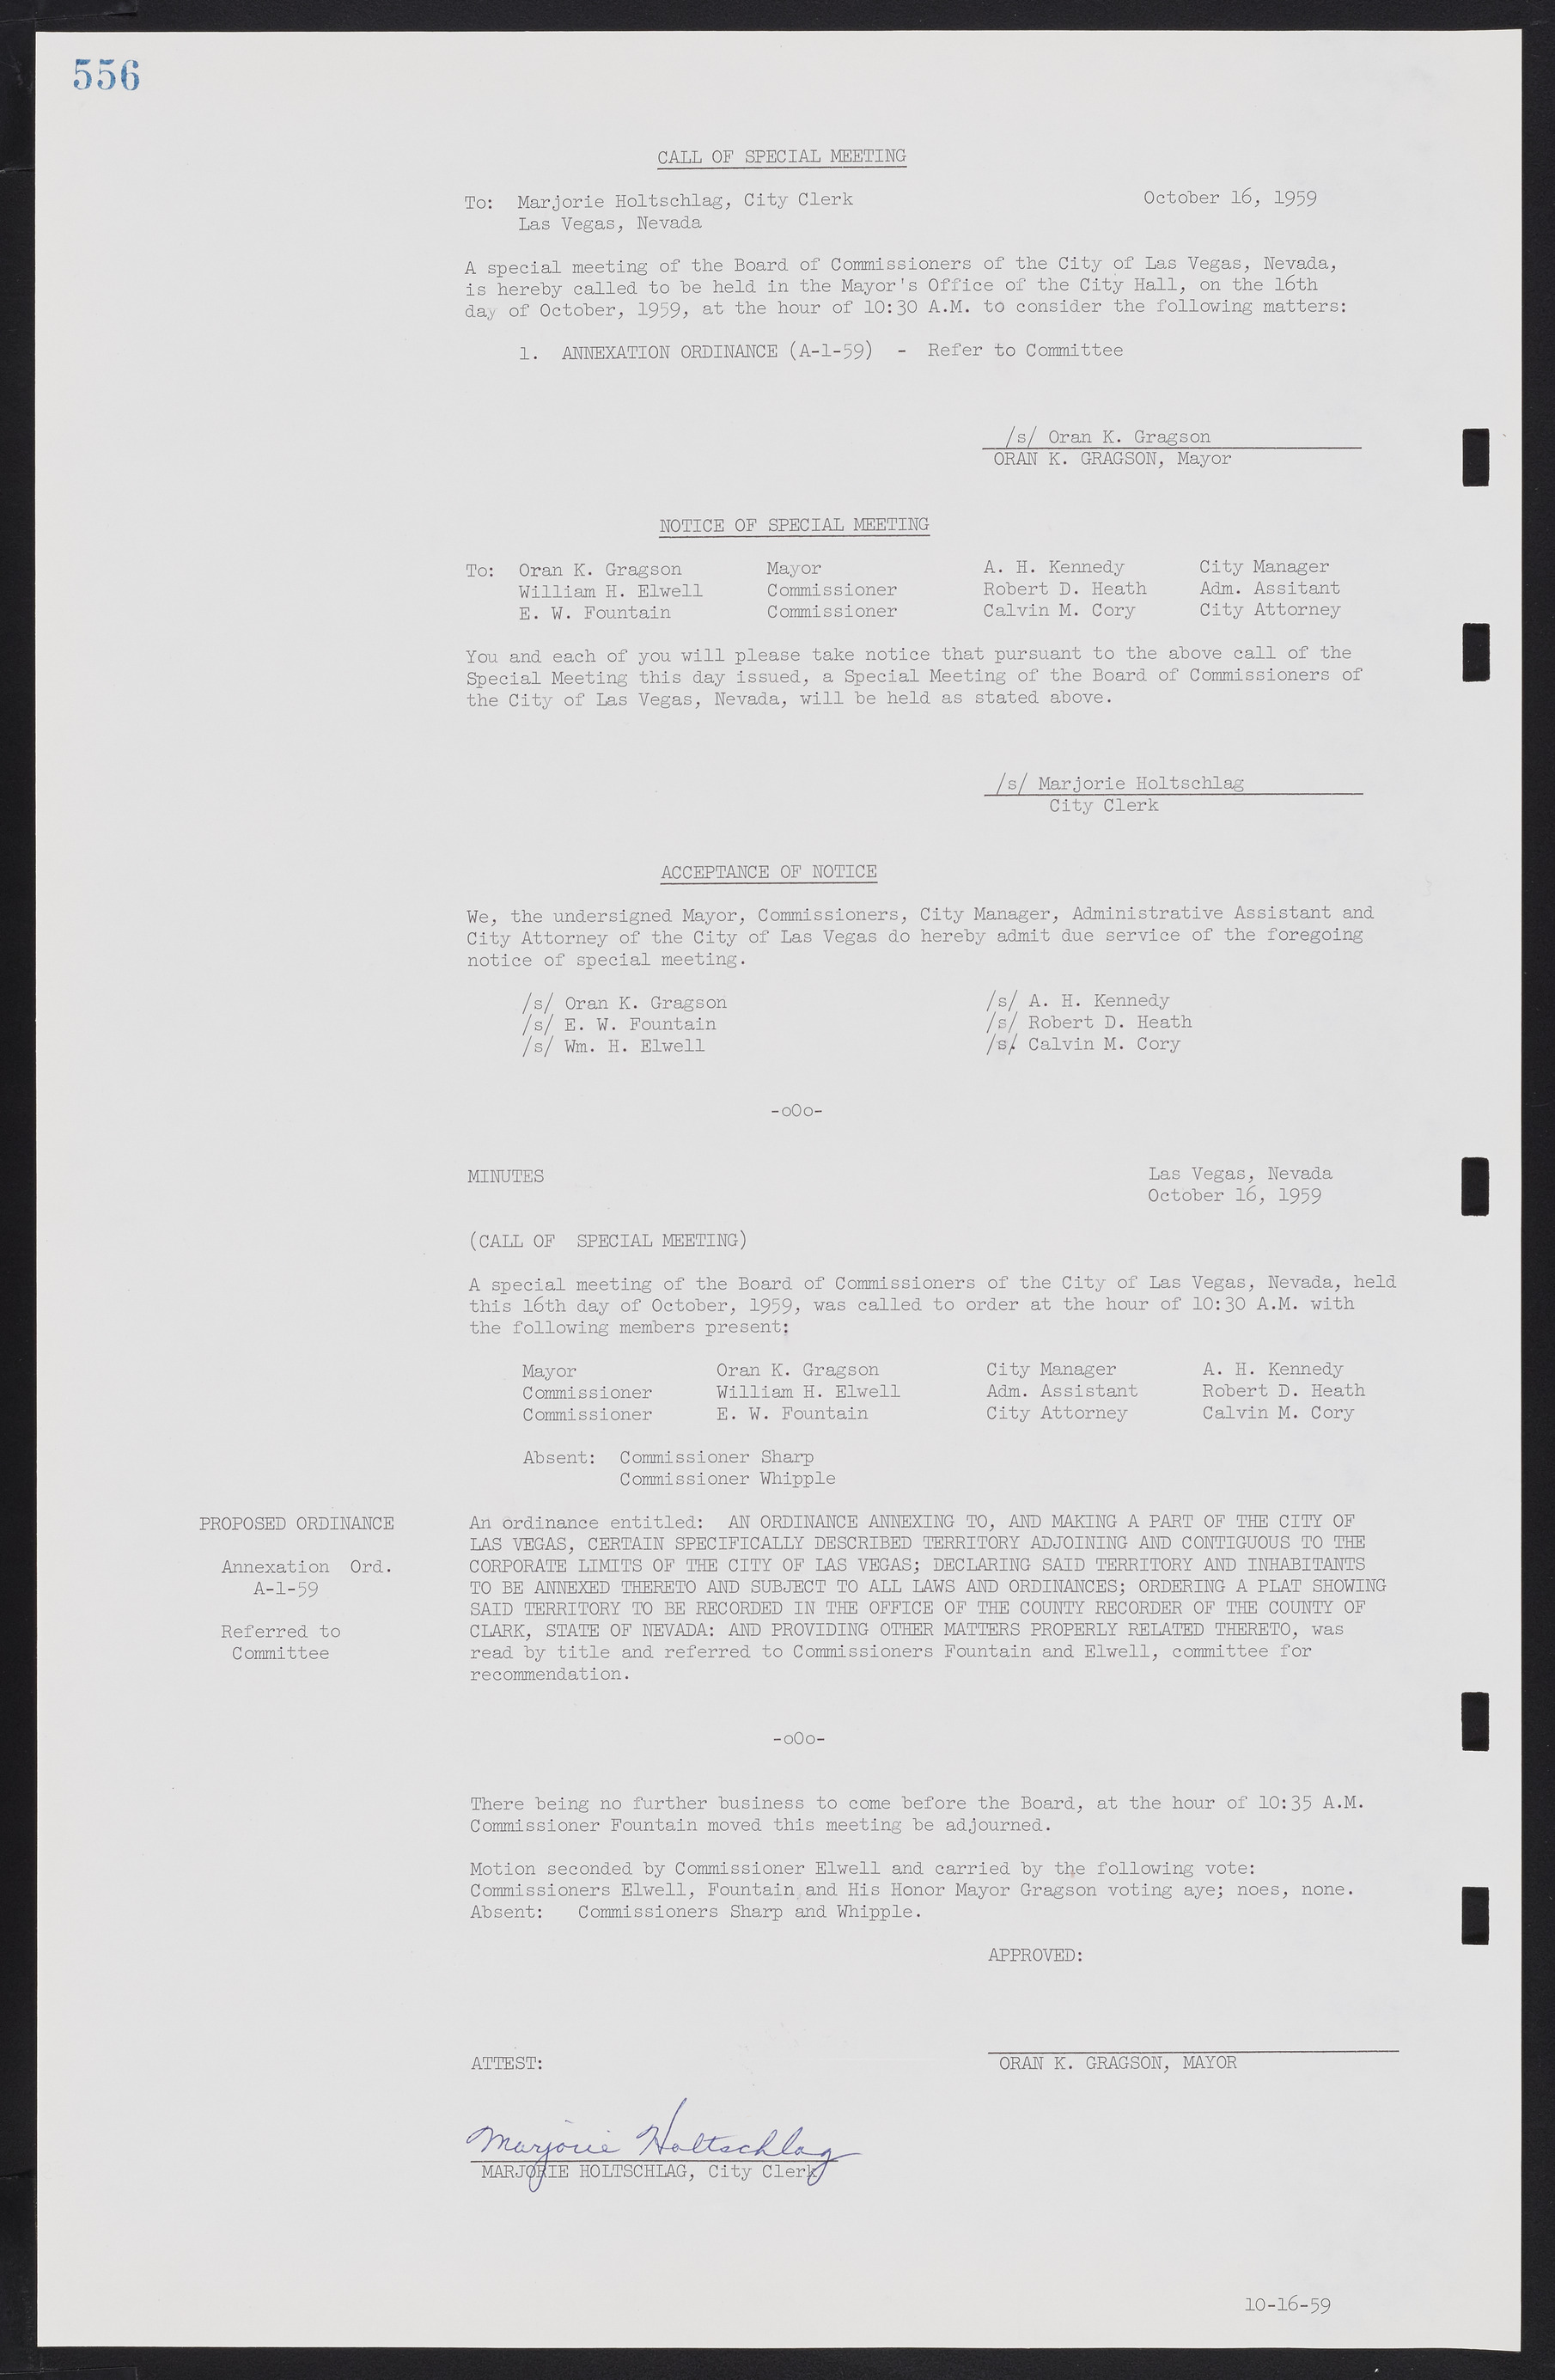 Las Vegas City Commission Minutes, November 20, 1957 to December 2, 1959, lvc000011-592